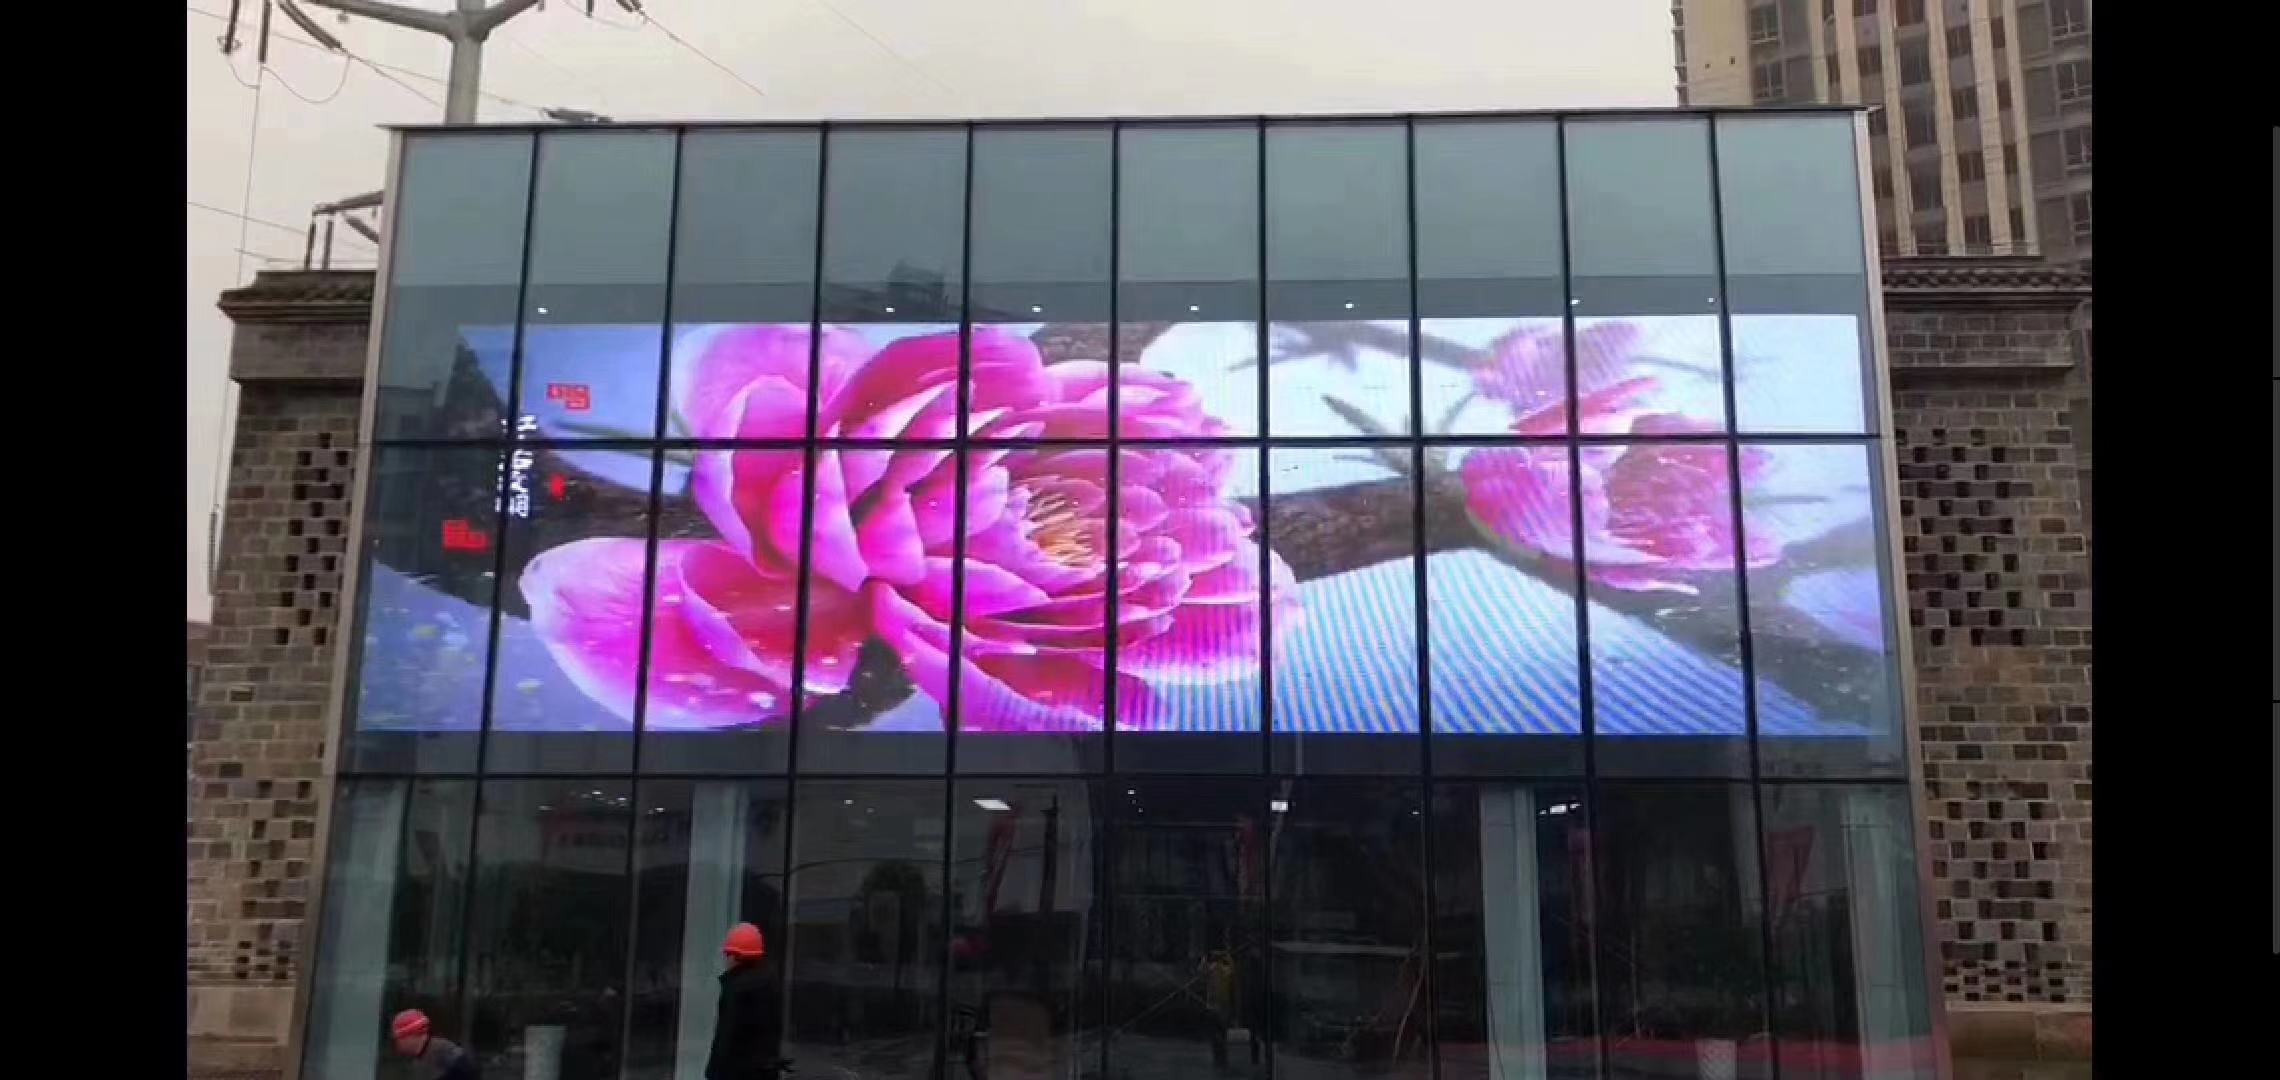 Paparan dinding video lutsinar 40 meter persegi bersinar dengan gambar yang terang